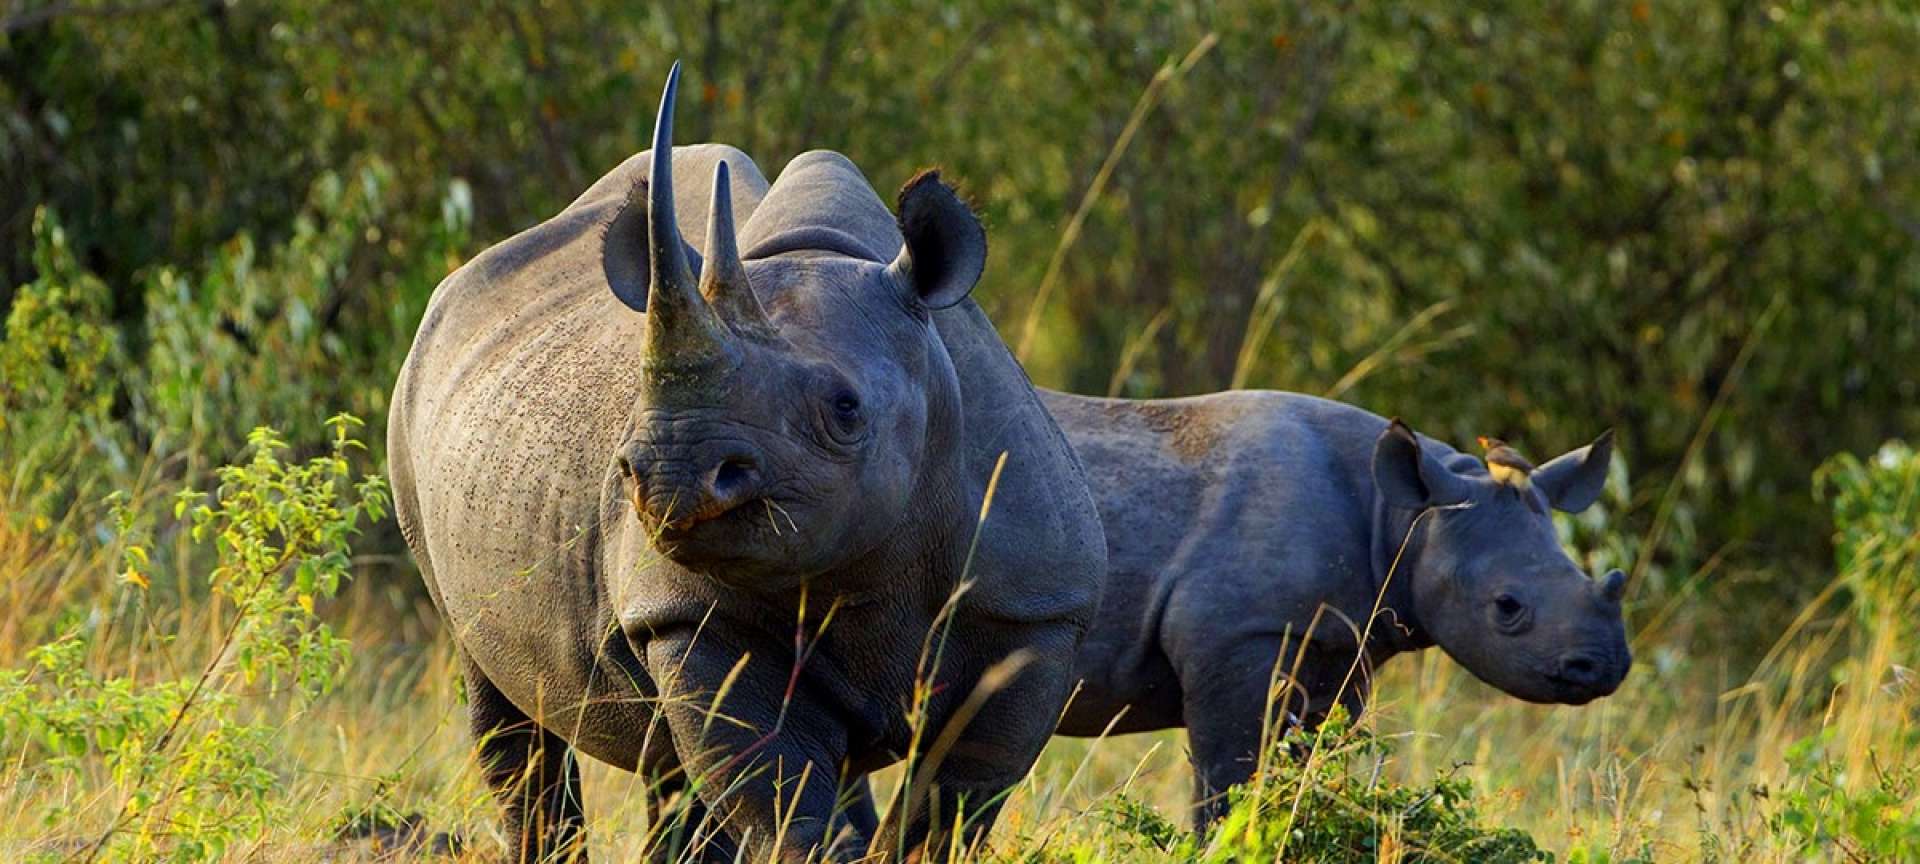 10 Endangered Animal Species in Africa